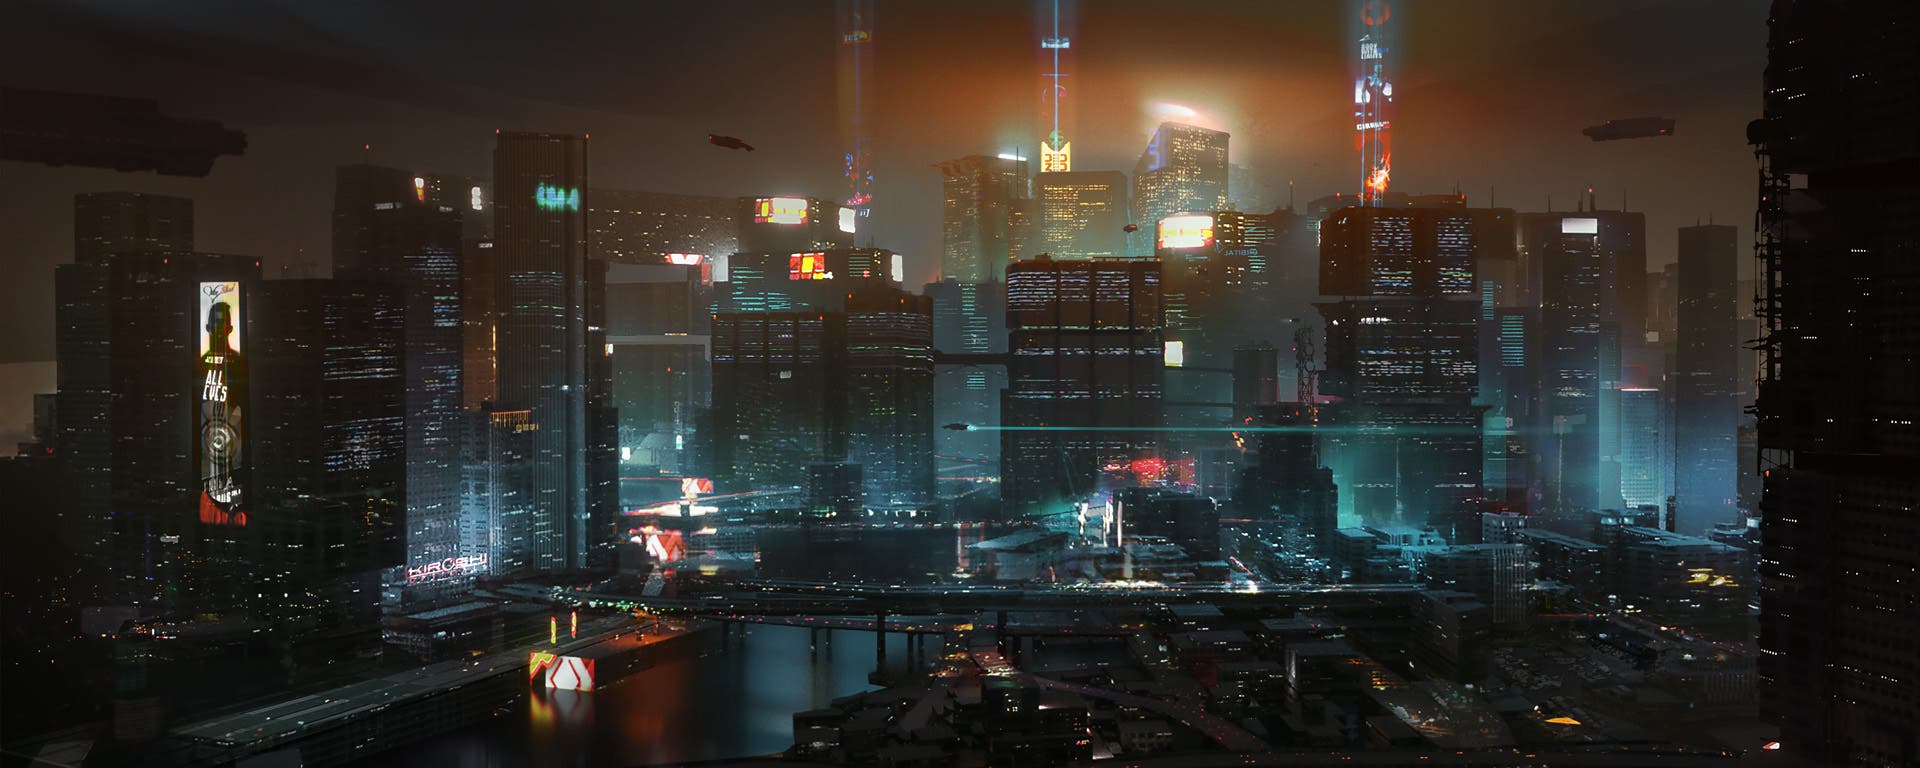 Cyberpunk Muestra M S De Night City En Nuevas Im Genes